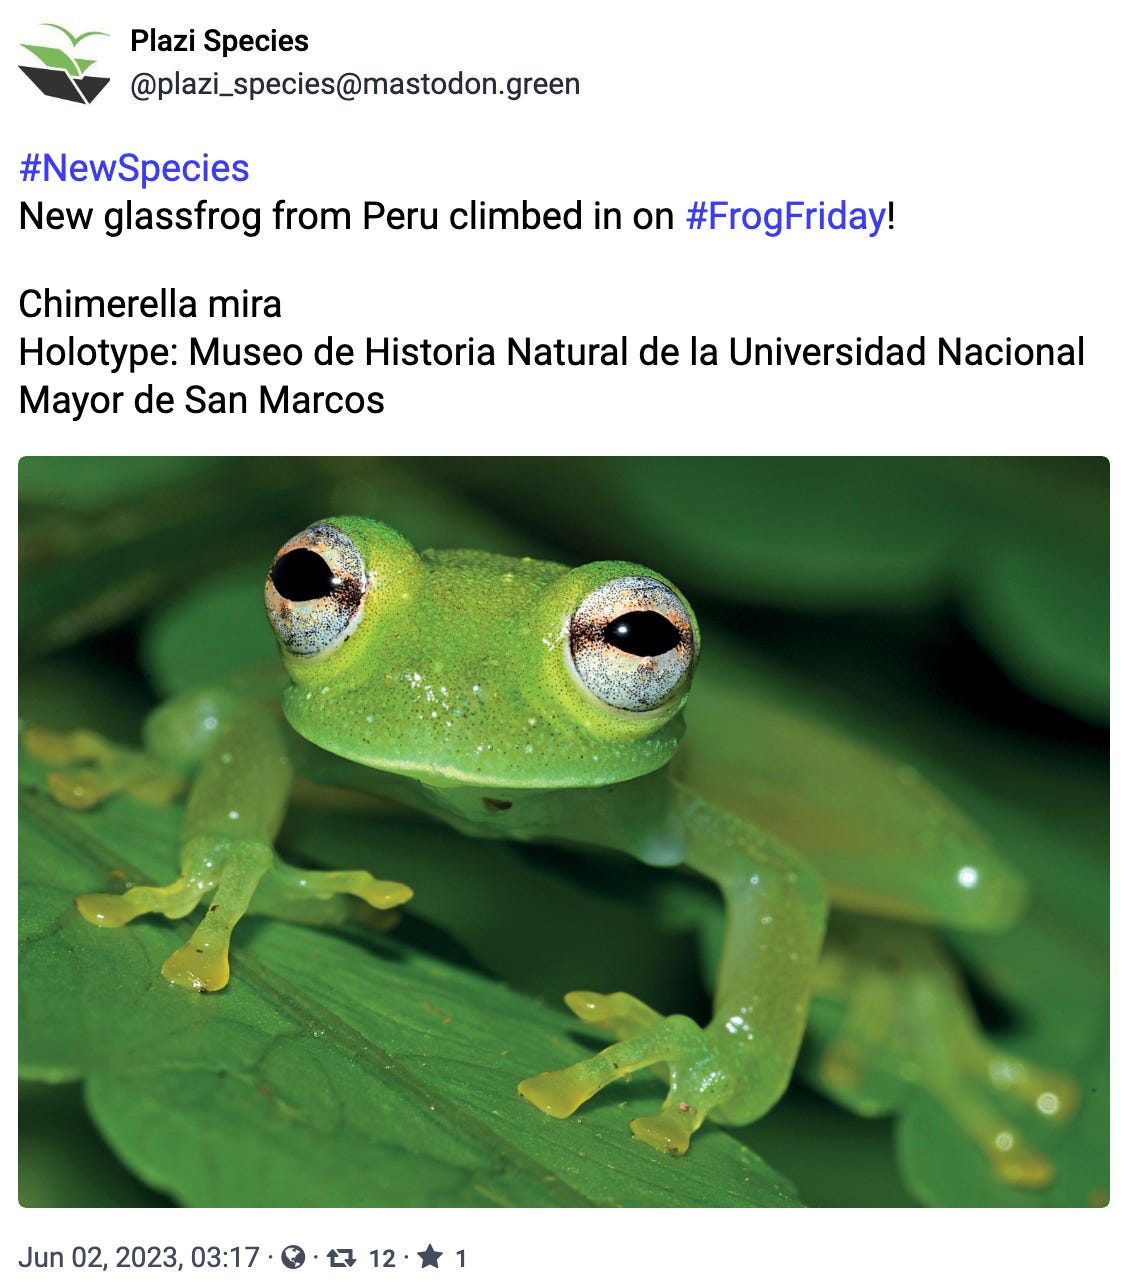 New glassfrog from Peru